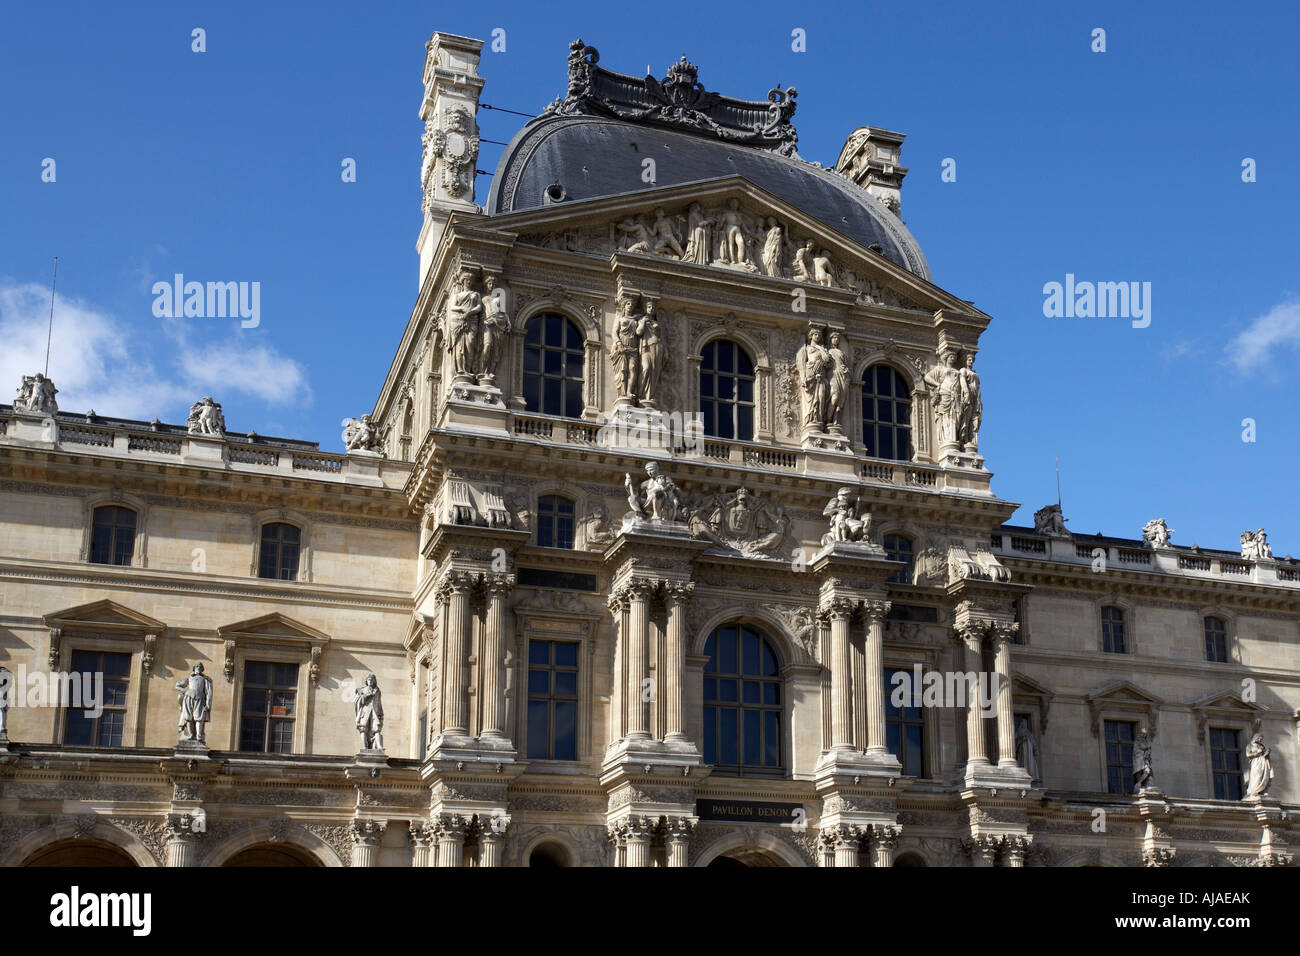 Pavillon Denon, Louvre, Paris, France Stock Photo